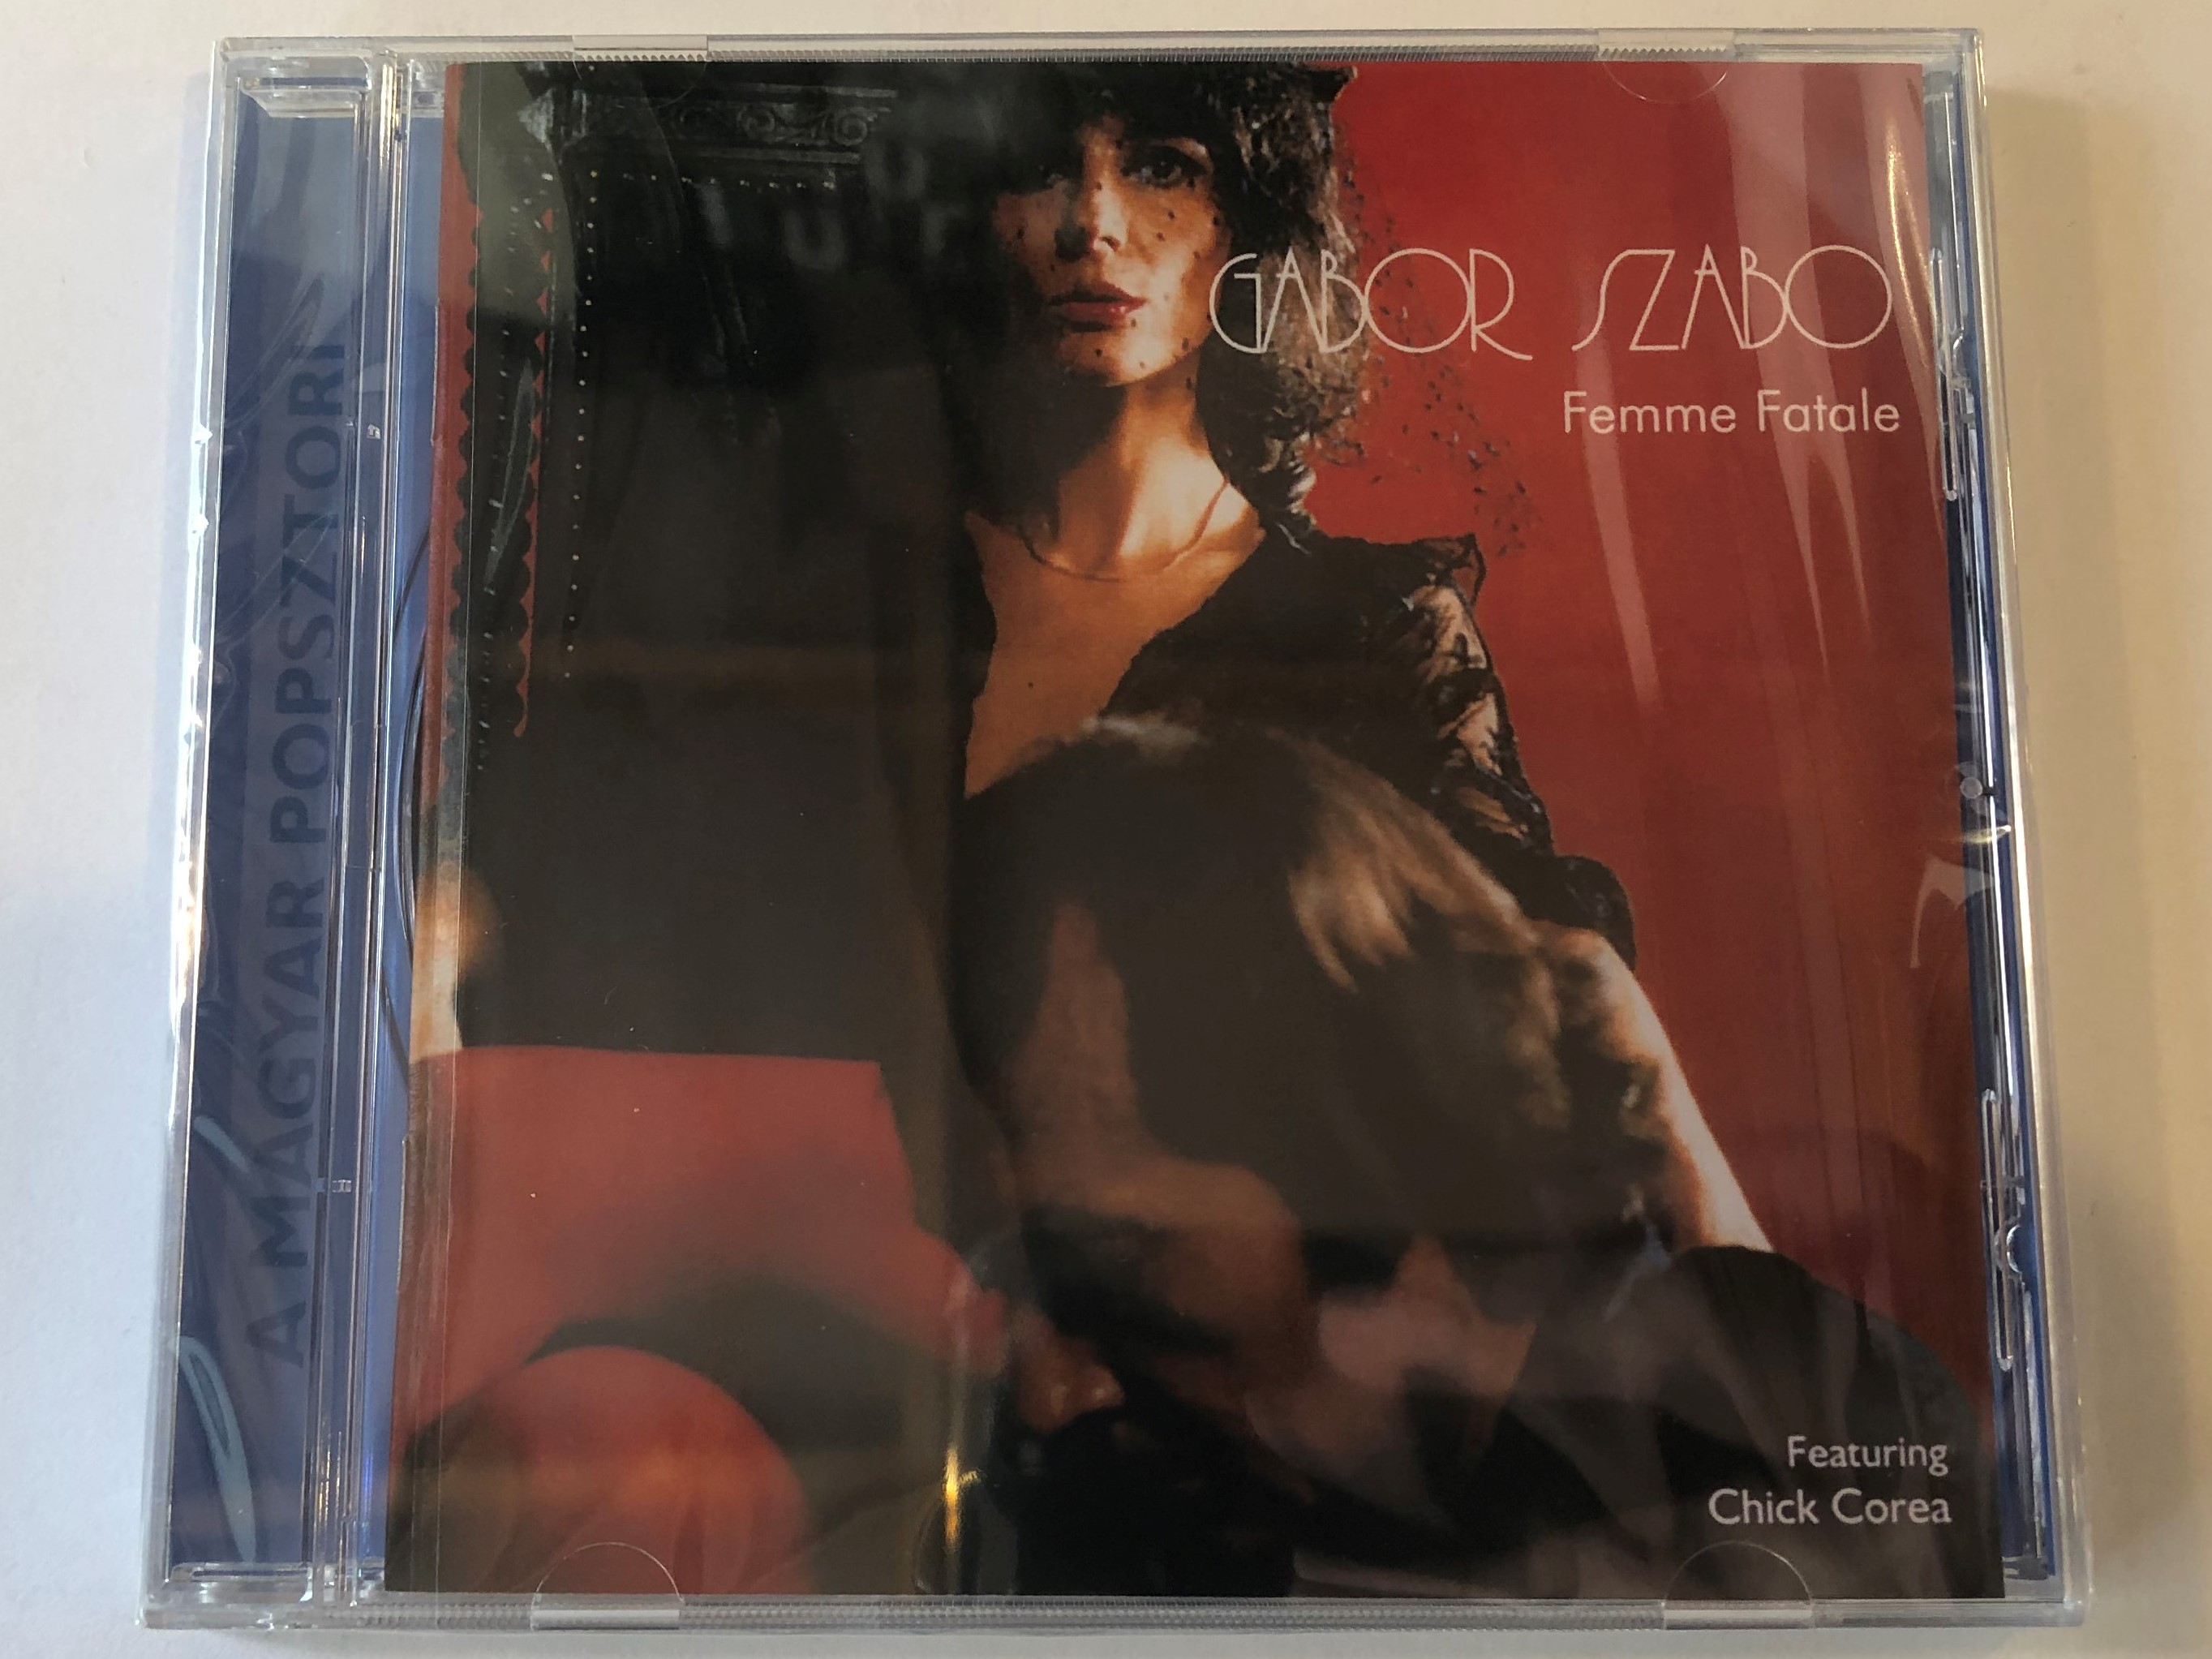 gabor-szabo-femme-fatale-featuring-chick-corea-mambo-records-audio-cd-hcd-37319-1-.jpg